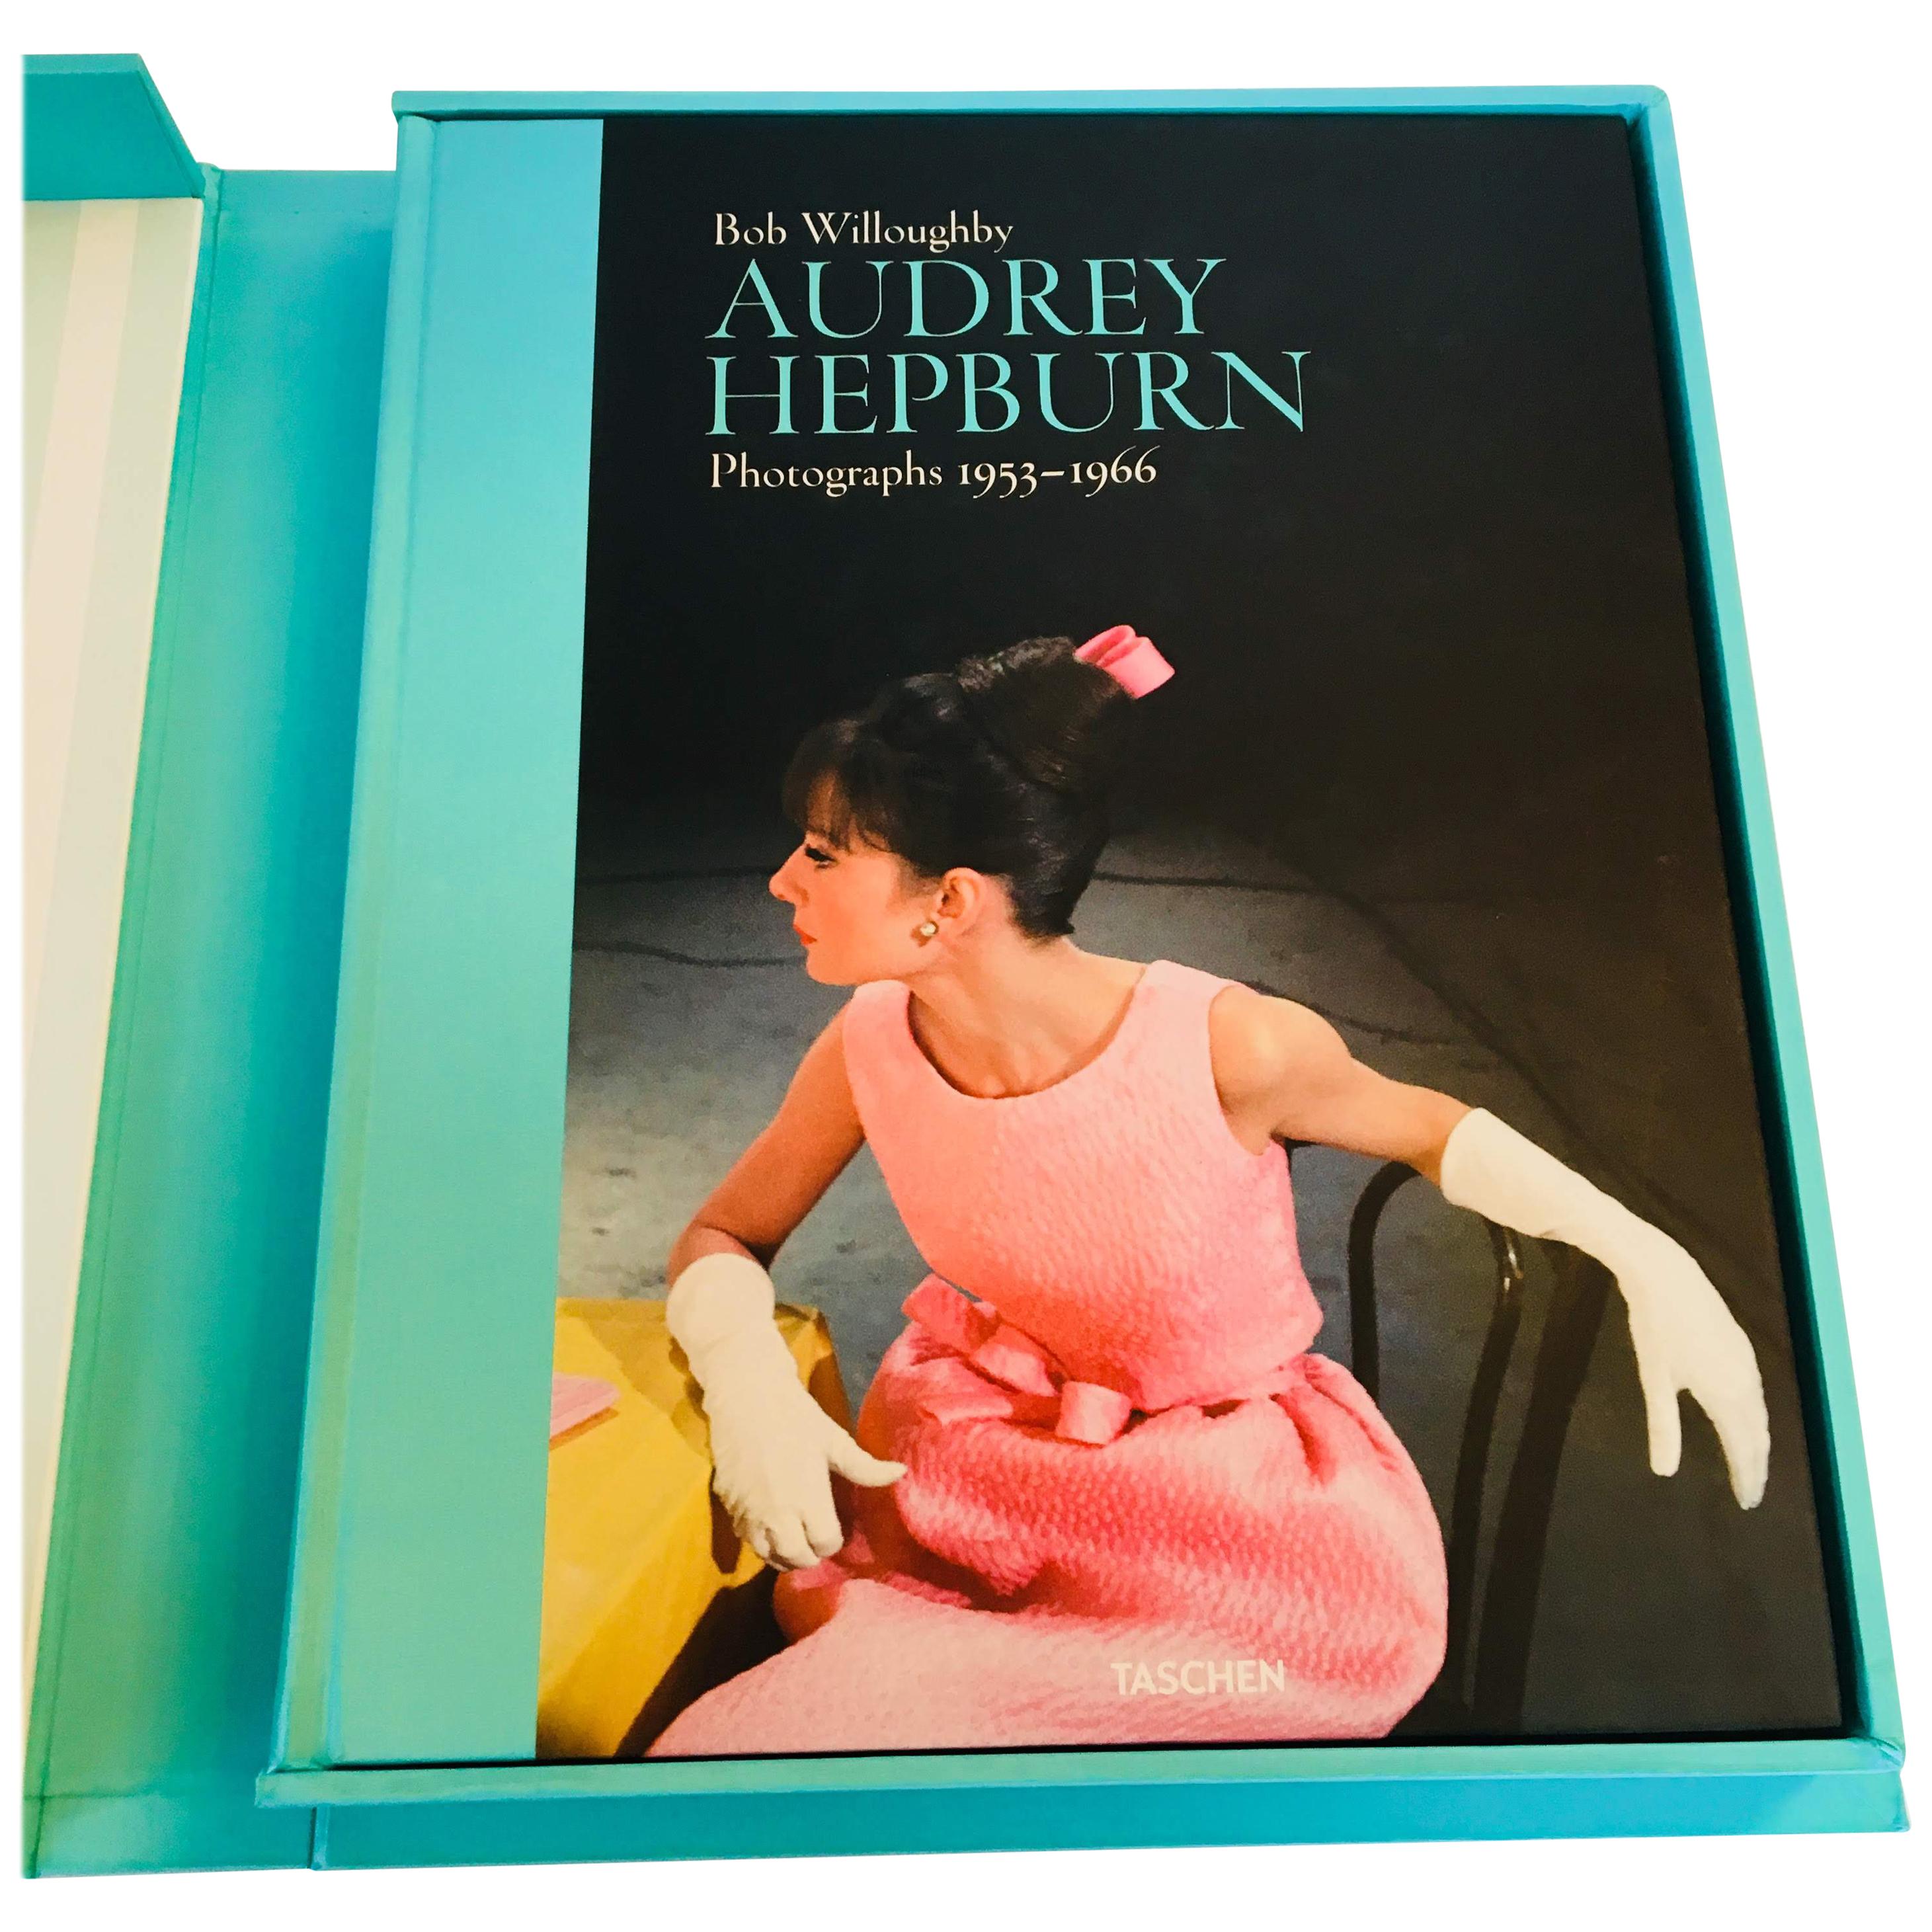 Bob Willoughby Audrey Hepburn Photographs Book, Signed Copy